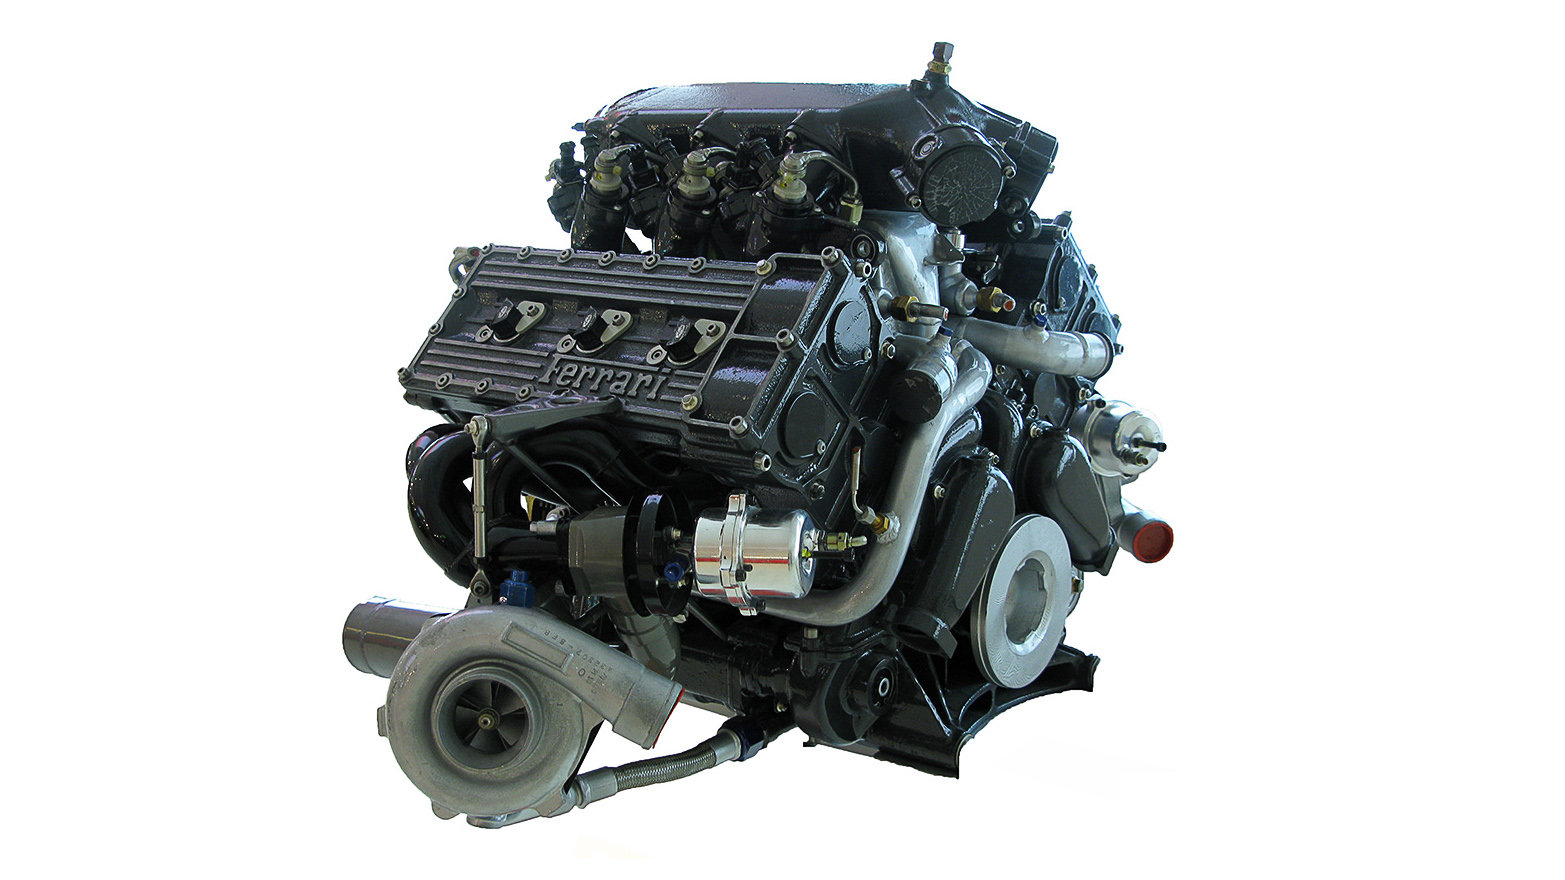 V6 turbomotor Ferrari